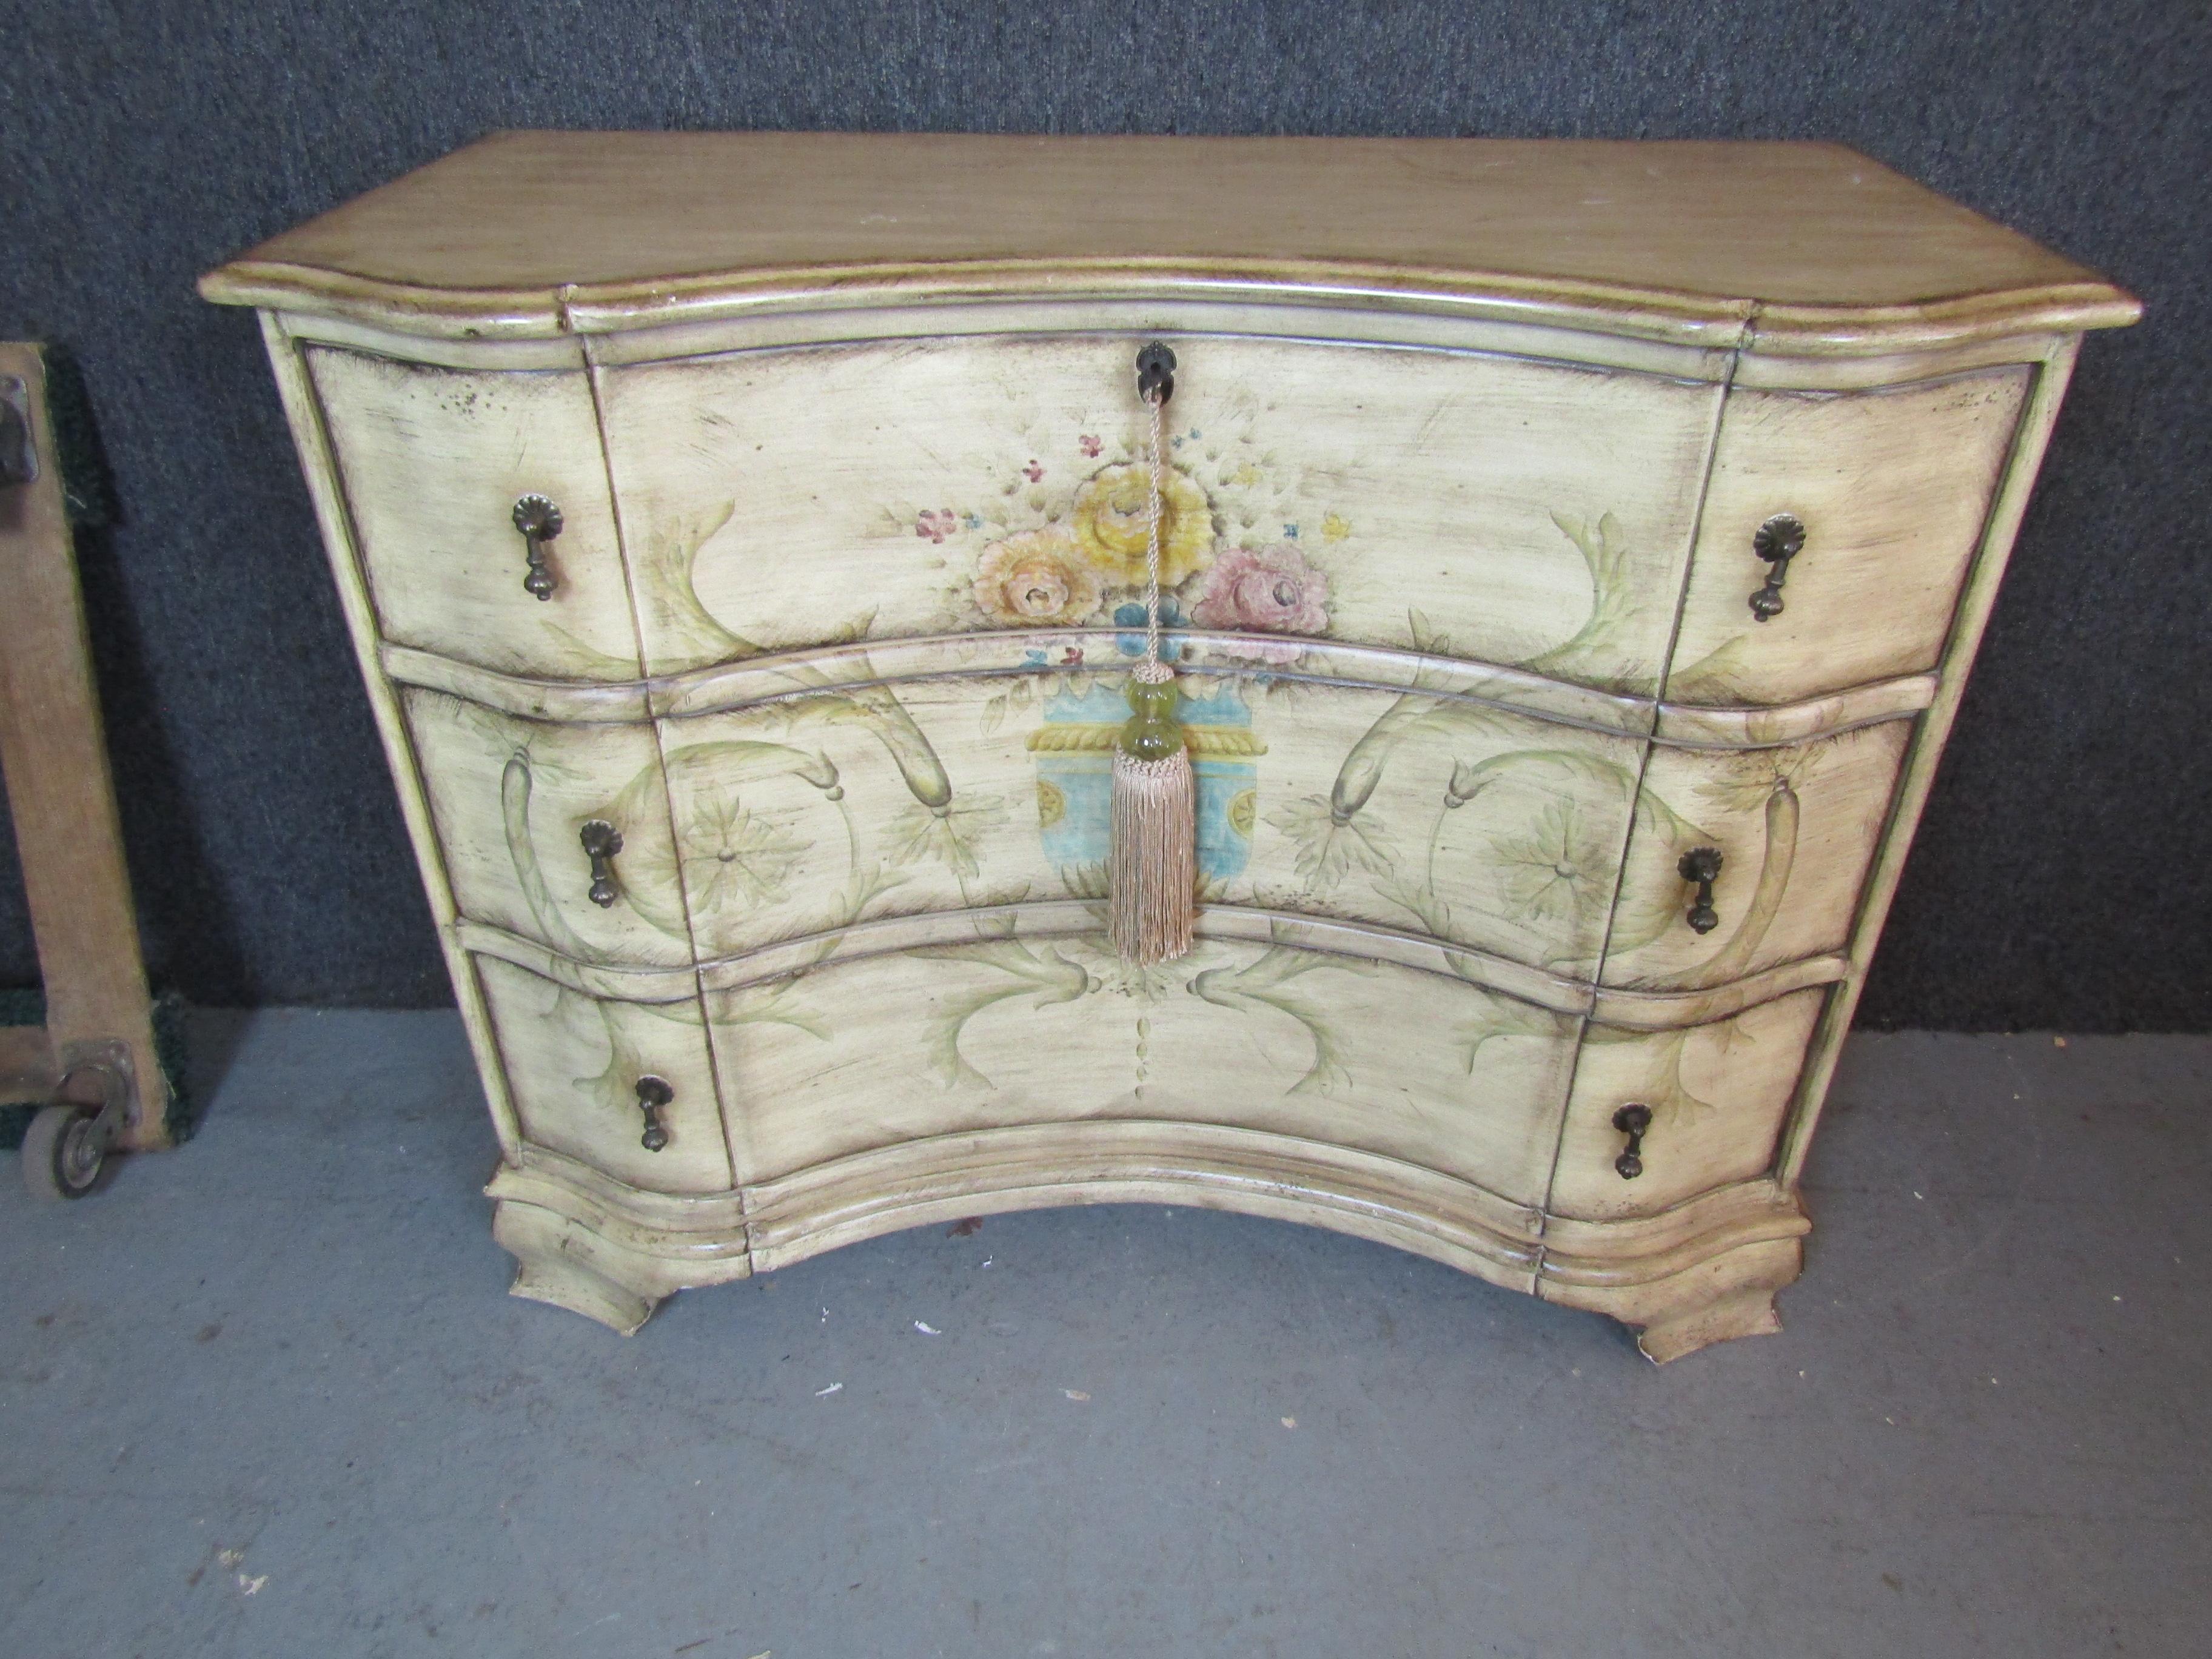 Lovely painted dresser from Hooker Furniture's popular 